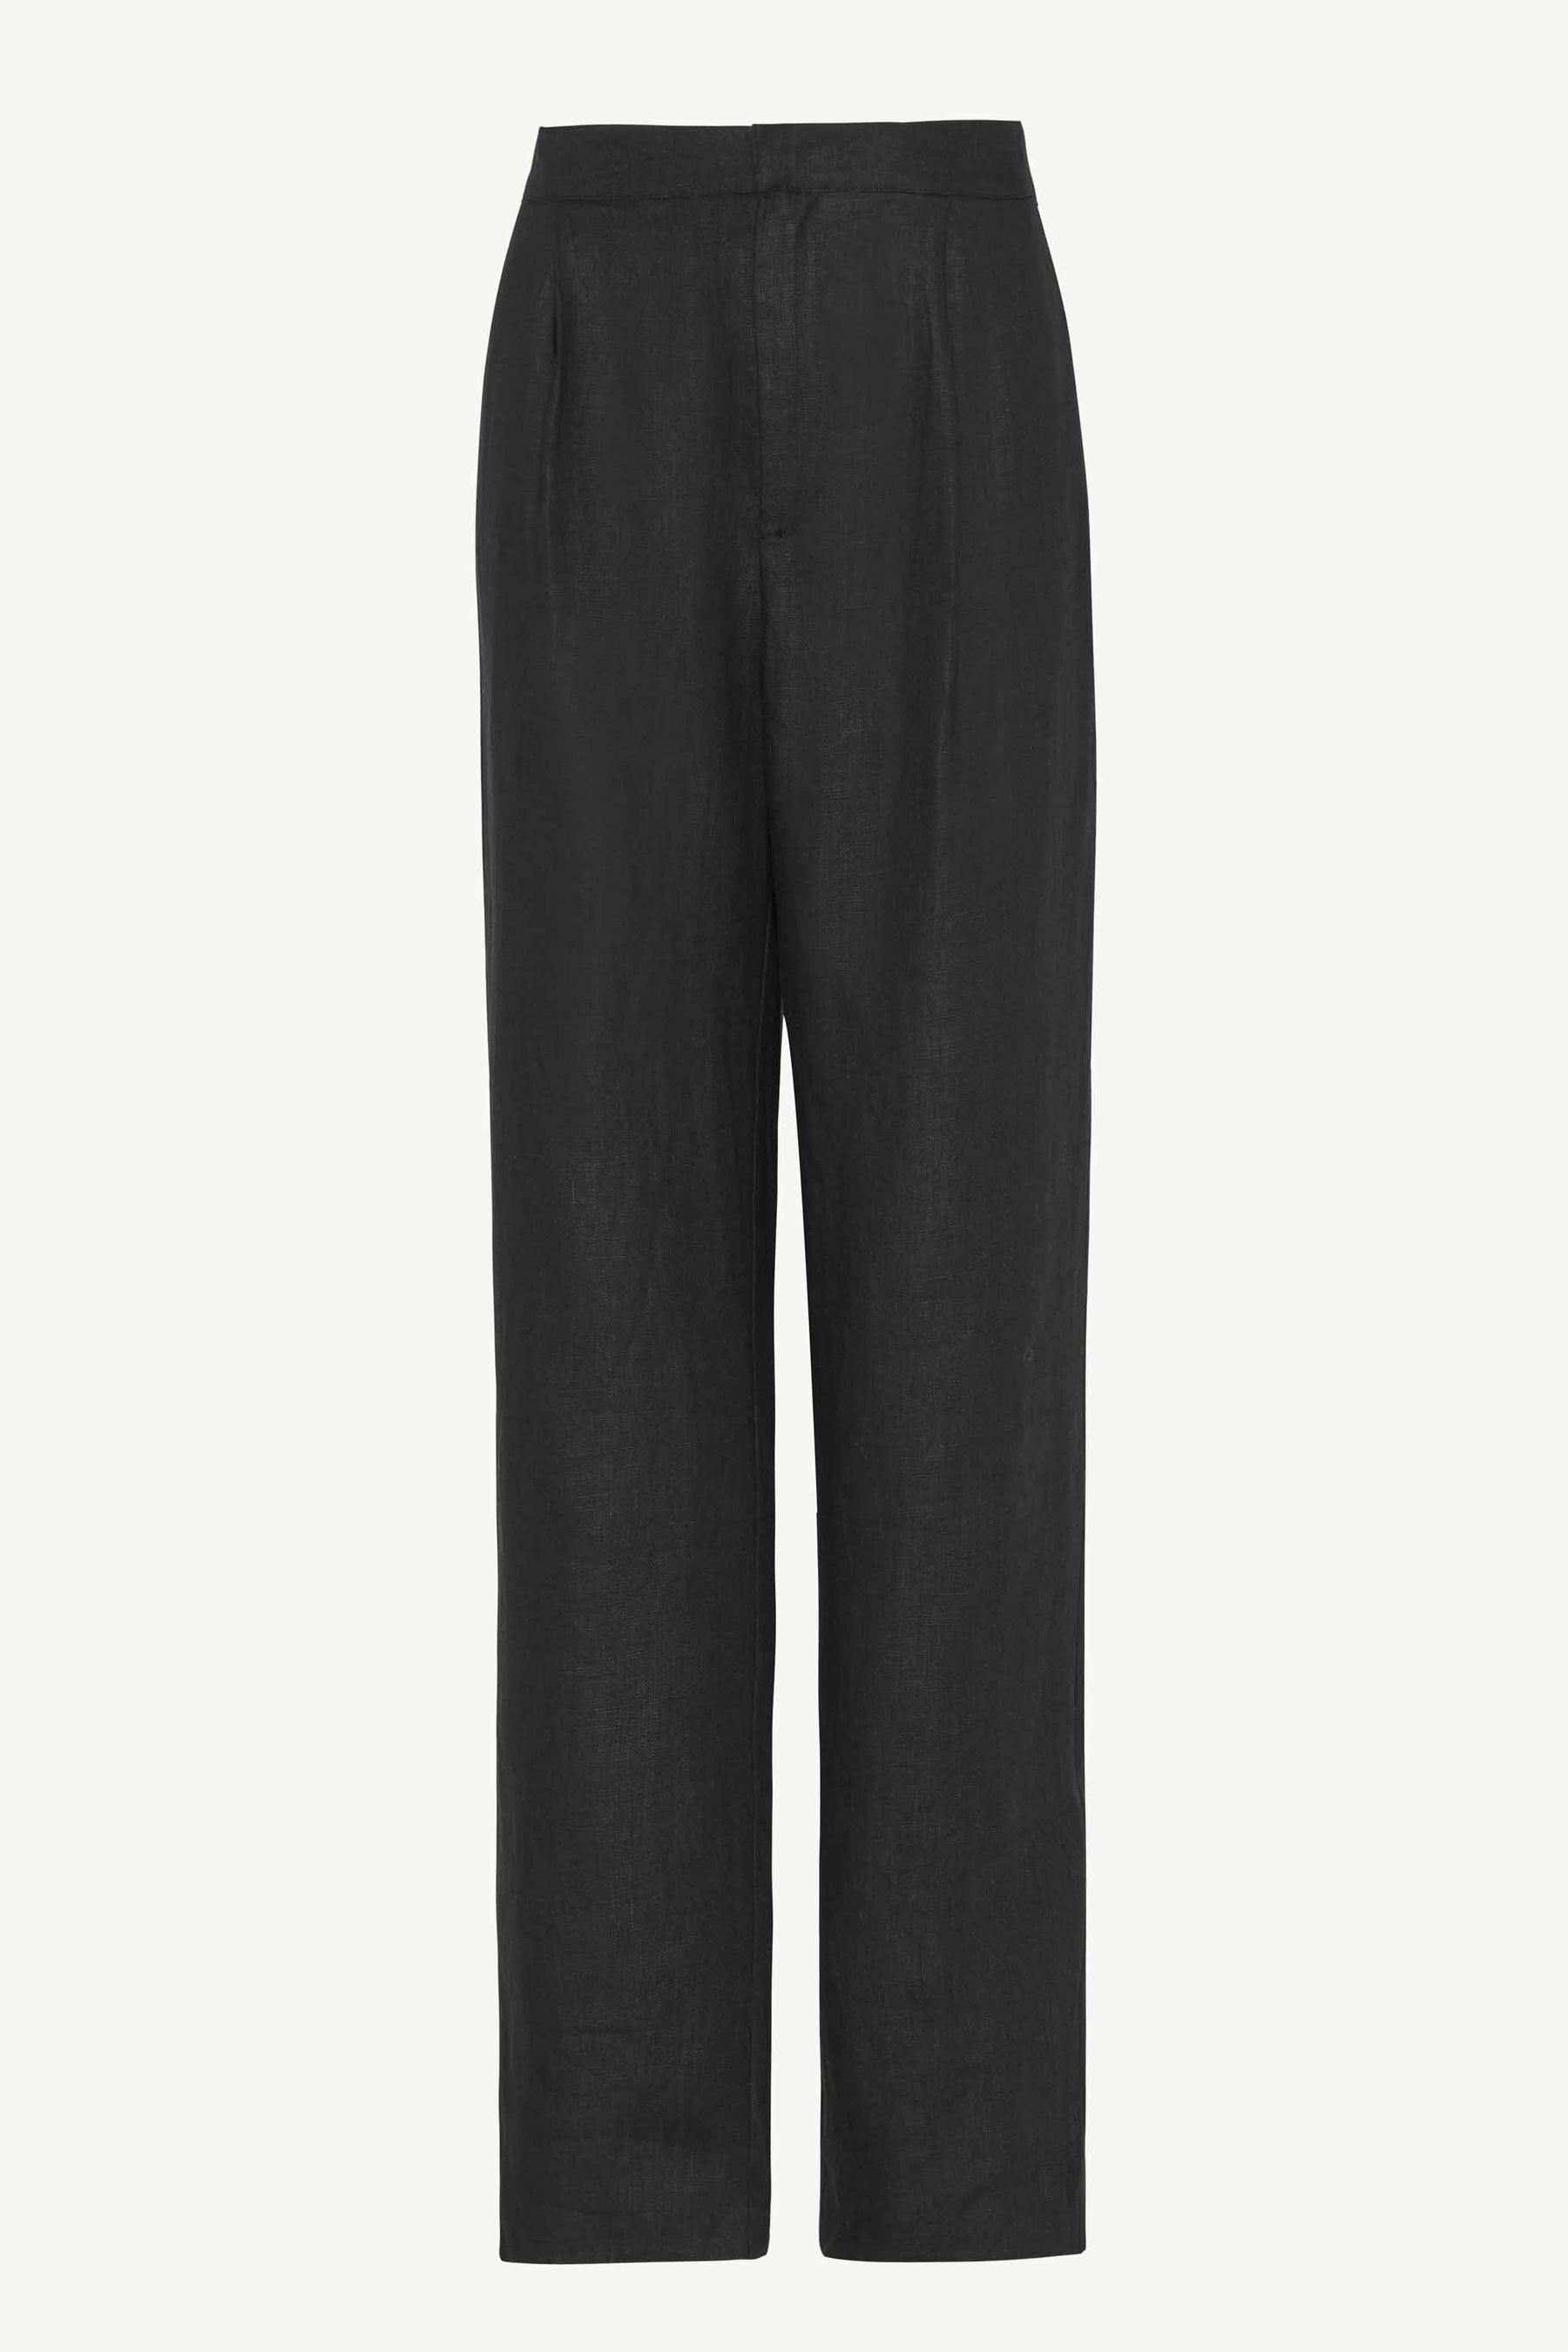 Linen Straight Leg Pants - Black Clothing Veiled Collection 